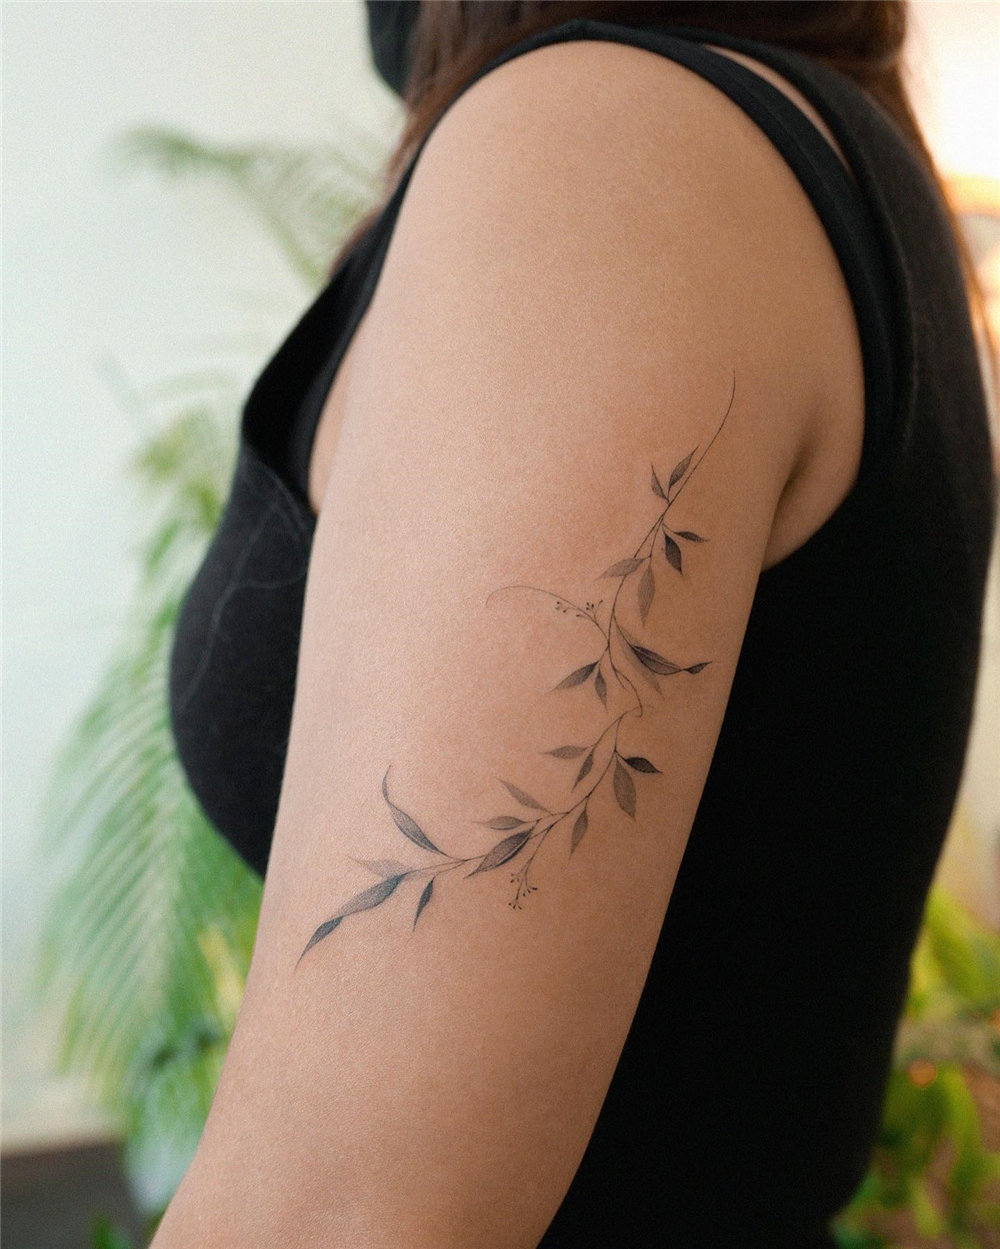 Photo oak leaves tattoo 25052019 077  oak leaves tattoo idea   tattoovaluenet  tattoovaluenet